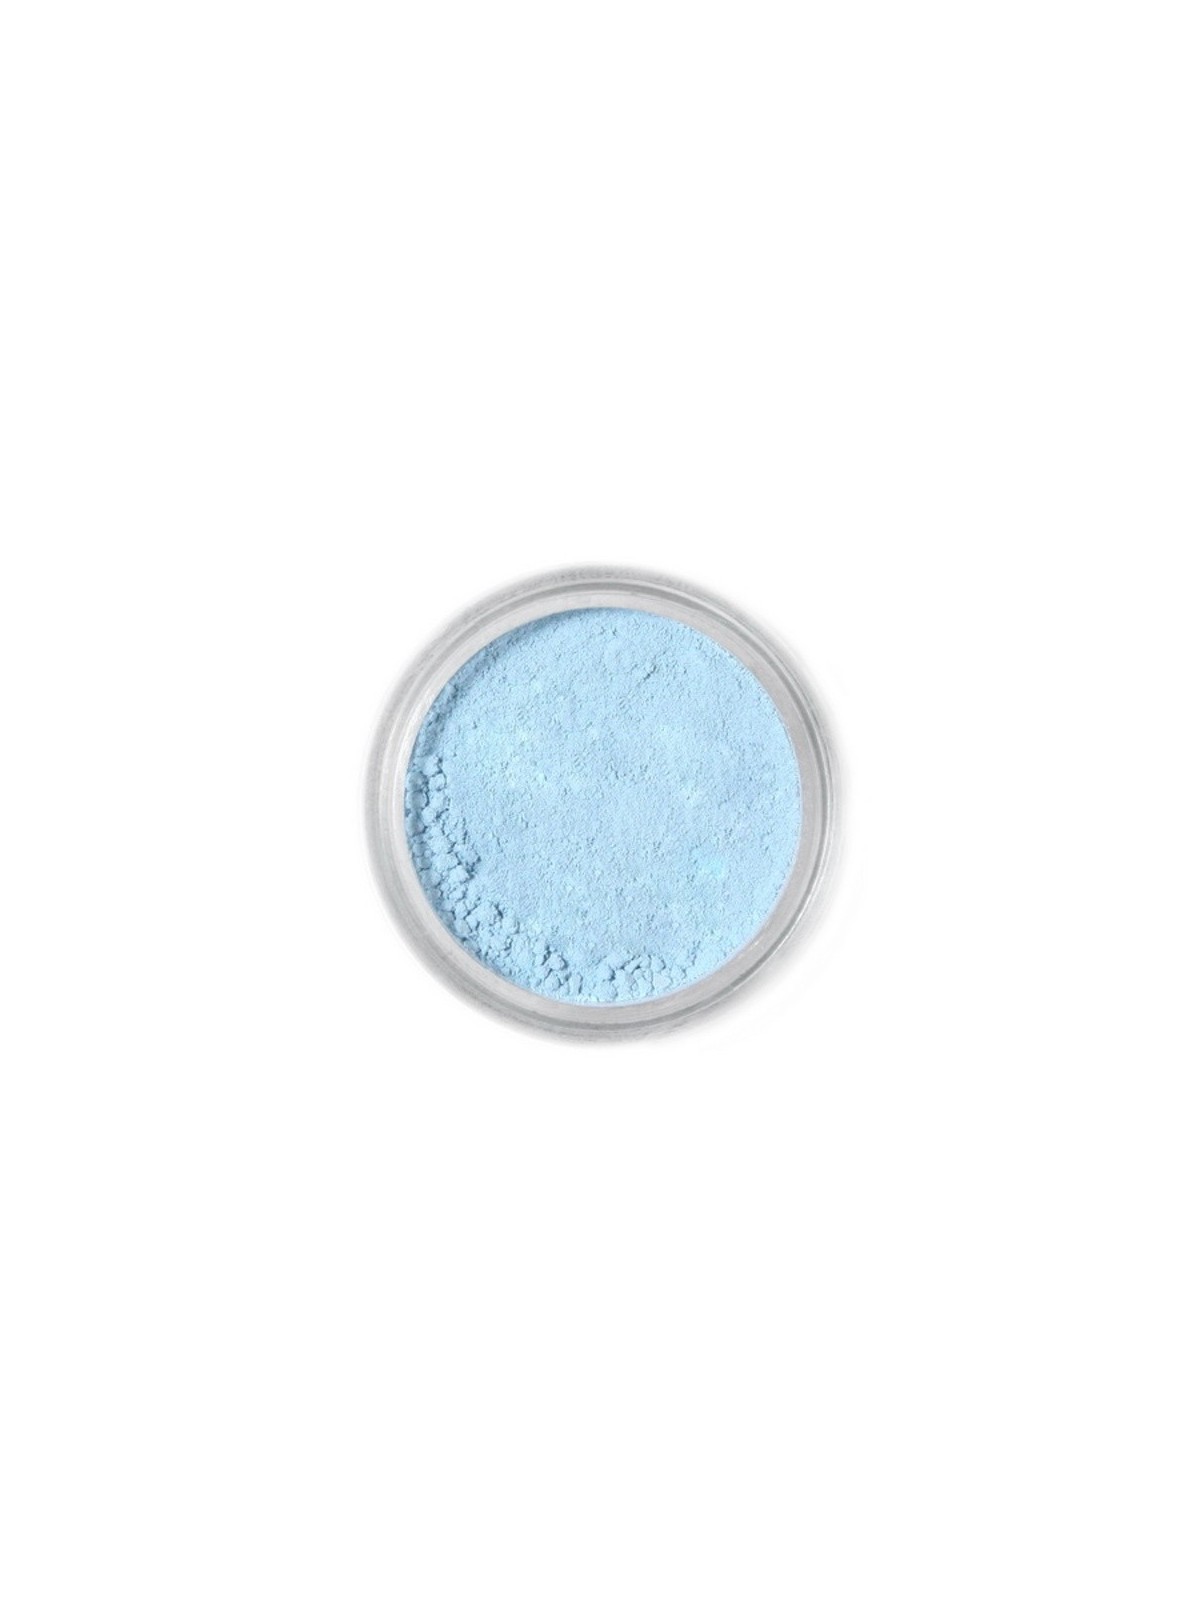 Jedlá prachová barva Fractal - Sky Blue, Égszínkék (4 g)